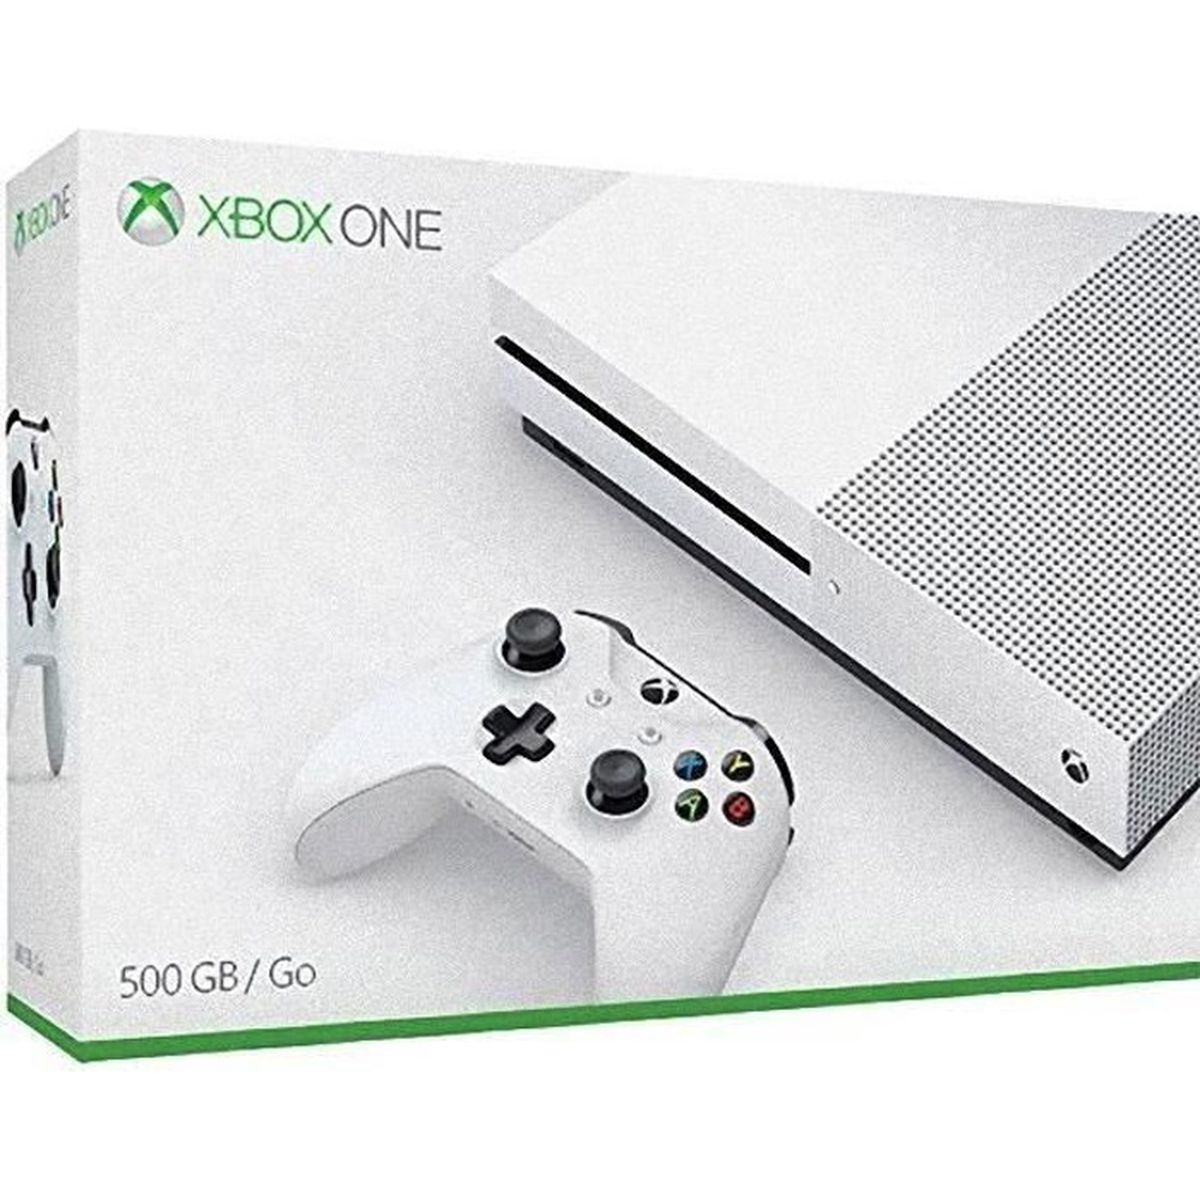 Solde d'hiver :&nbsp;la console Xbox One S&nbsp;© Cdiscount